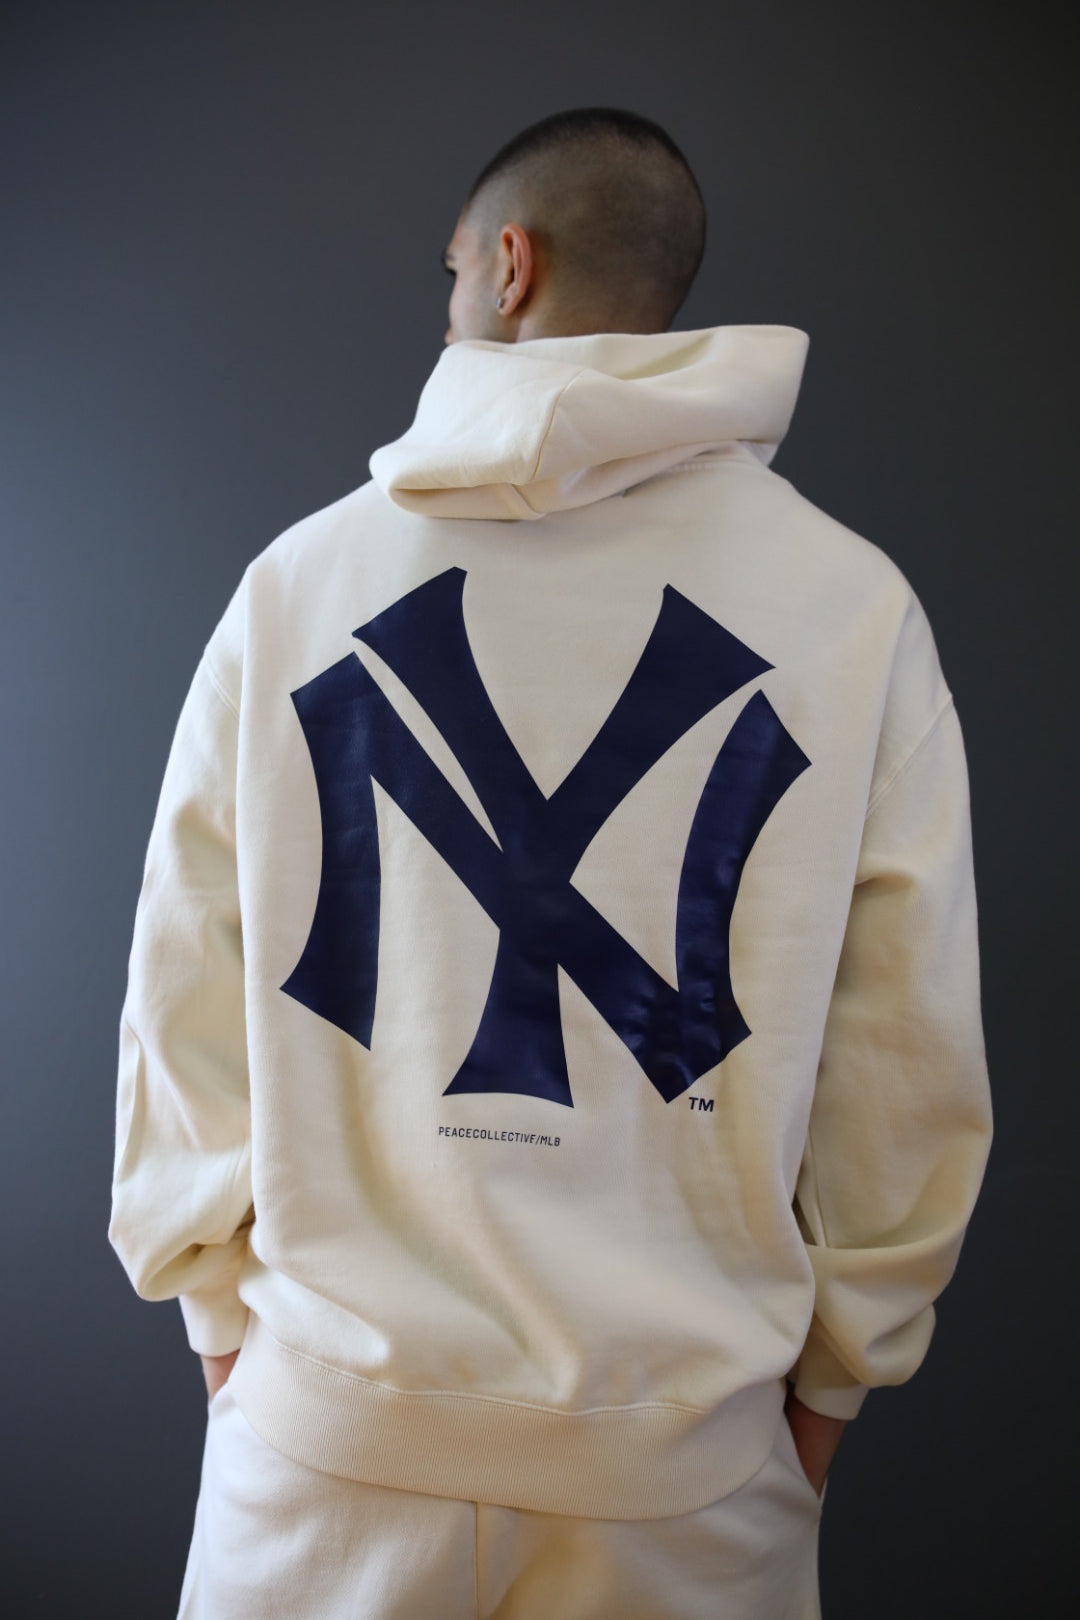 New York Yankees Heavyweight Hoodie - Ivory